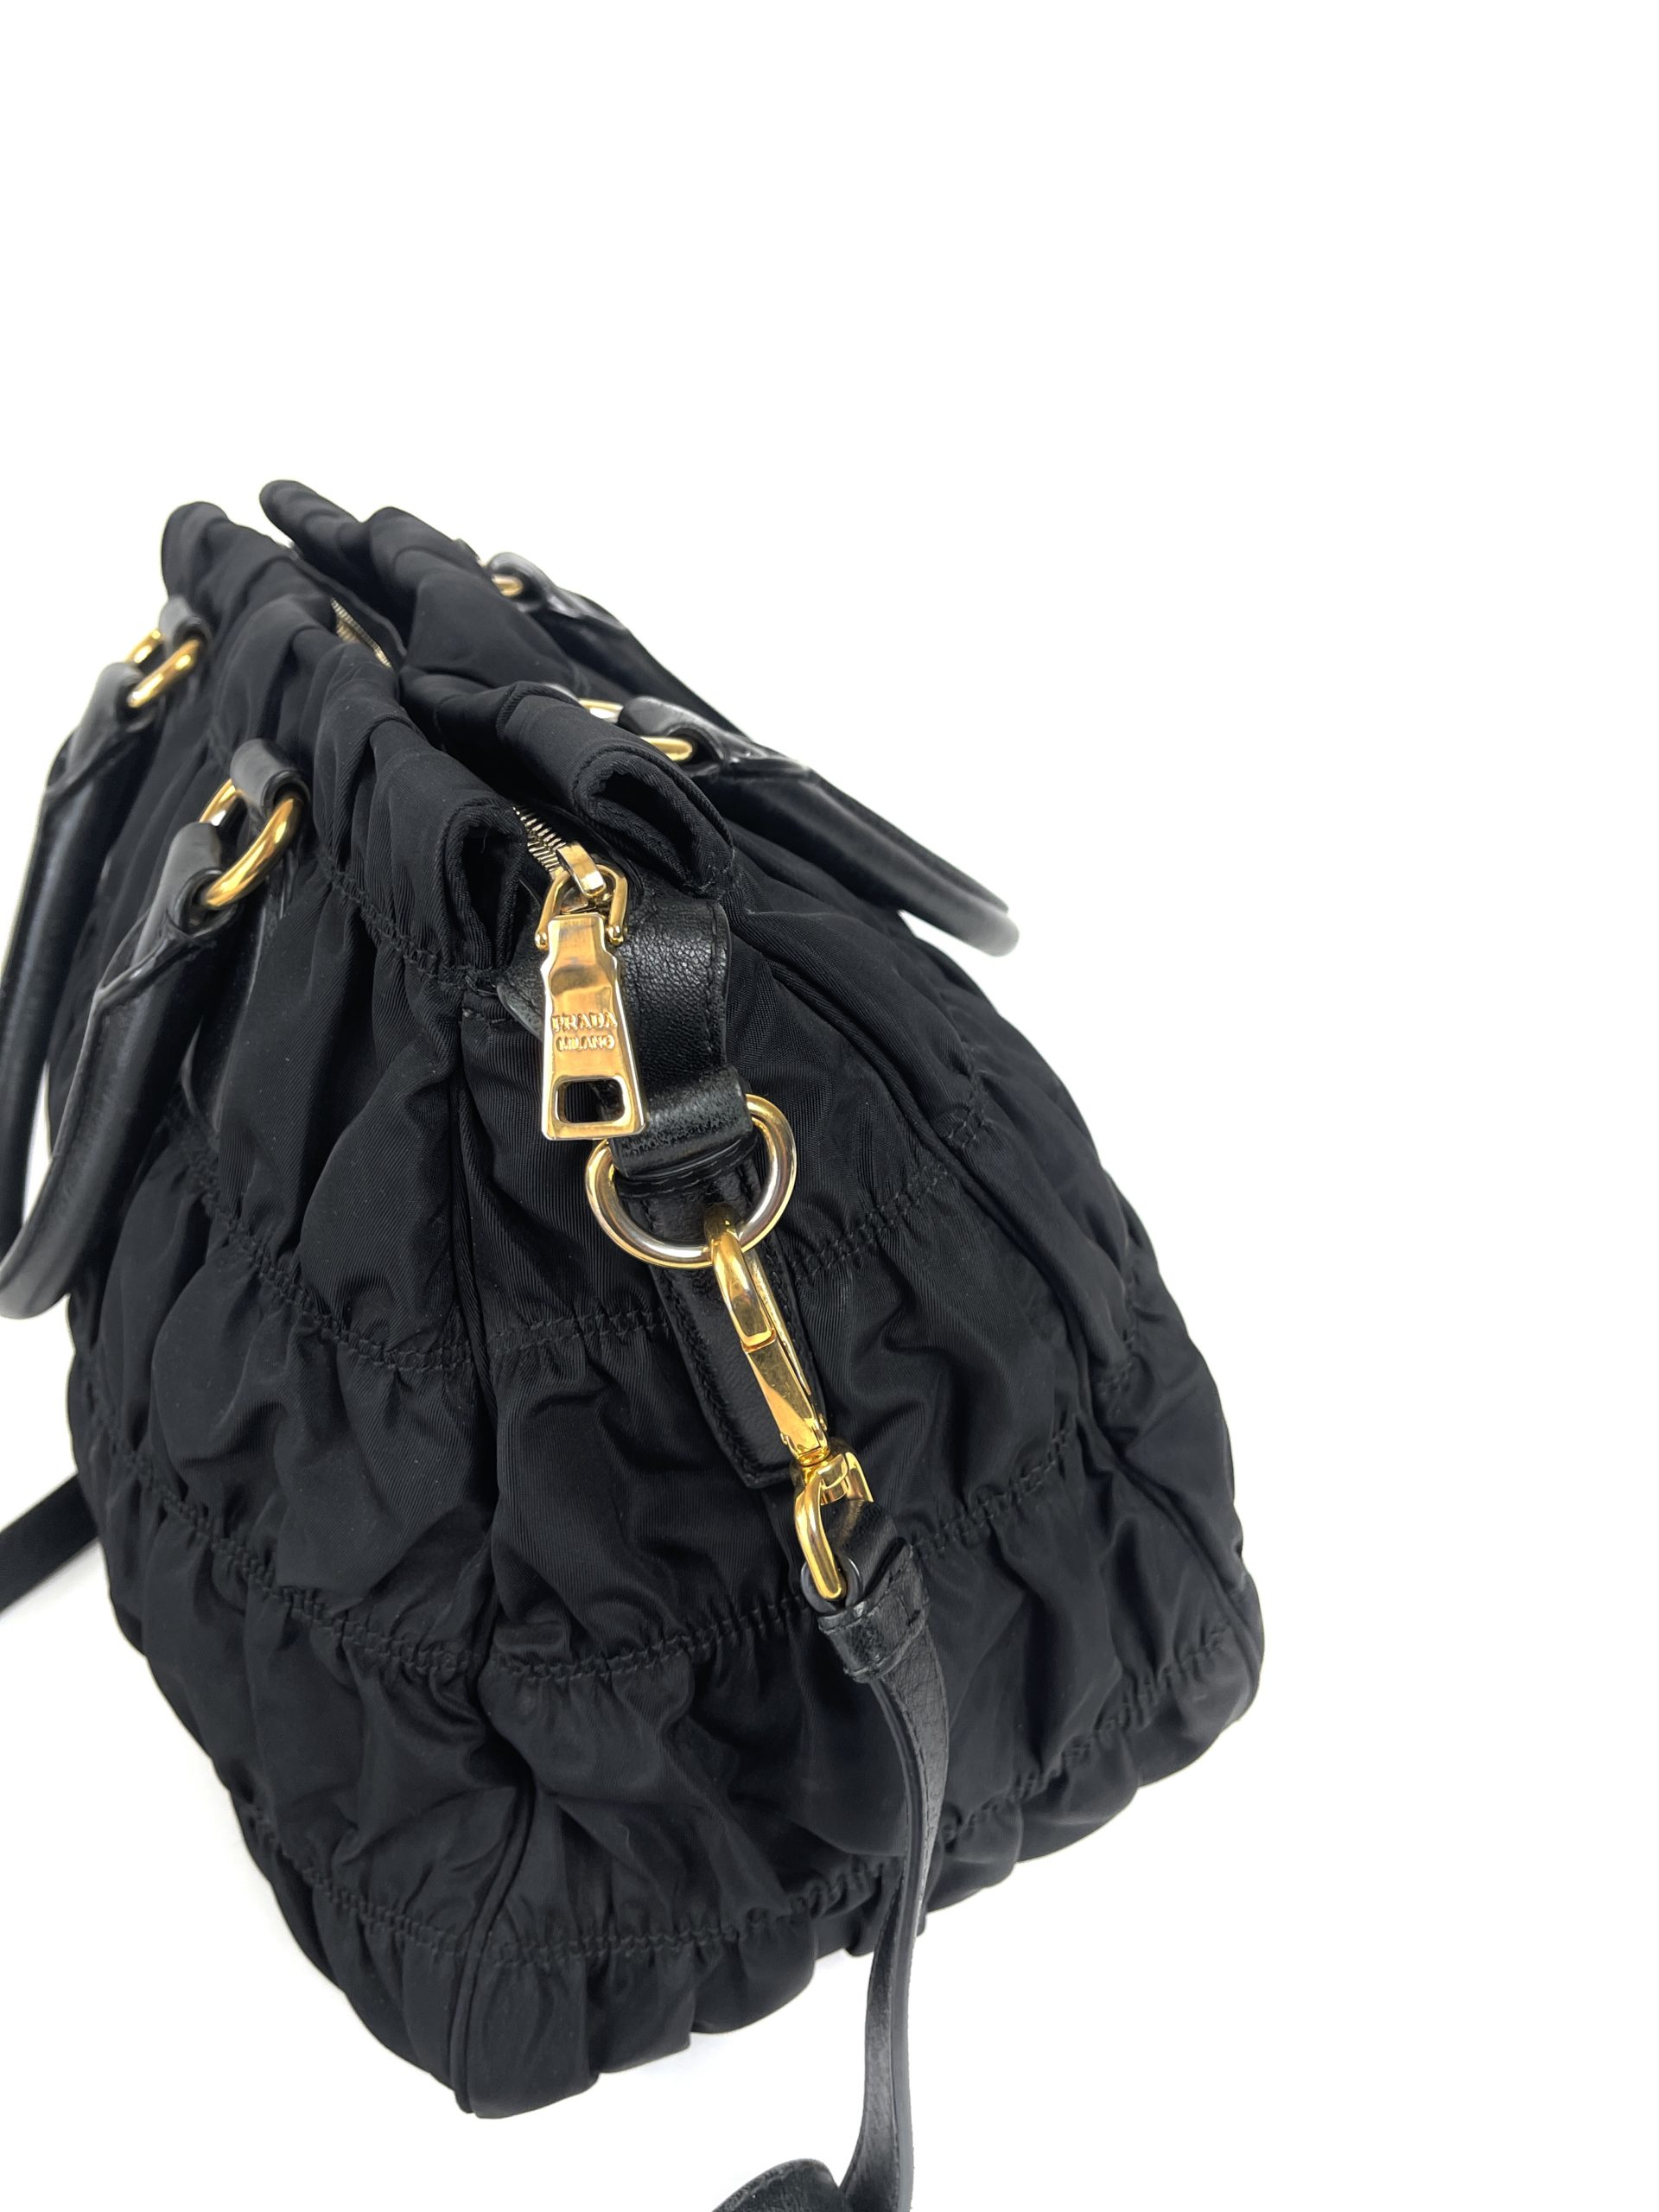 Prada Tessuto Gaufre Nylon Small Black Satchel Handbag Black